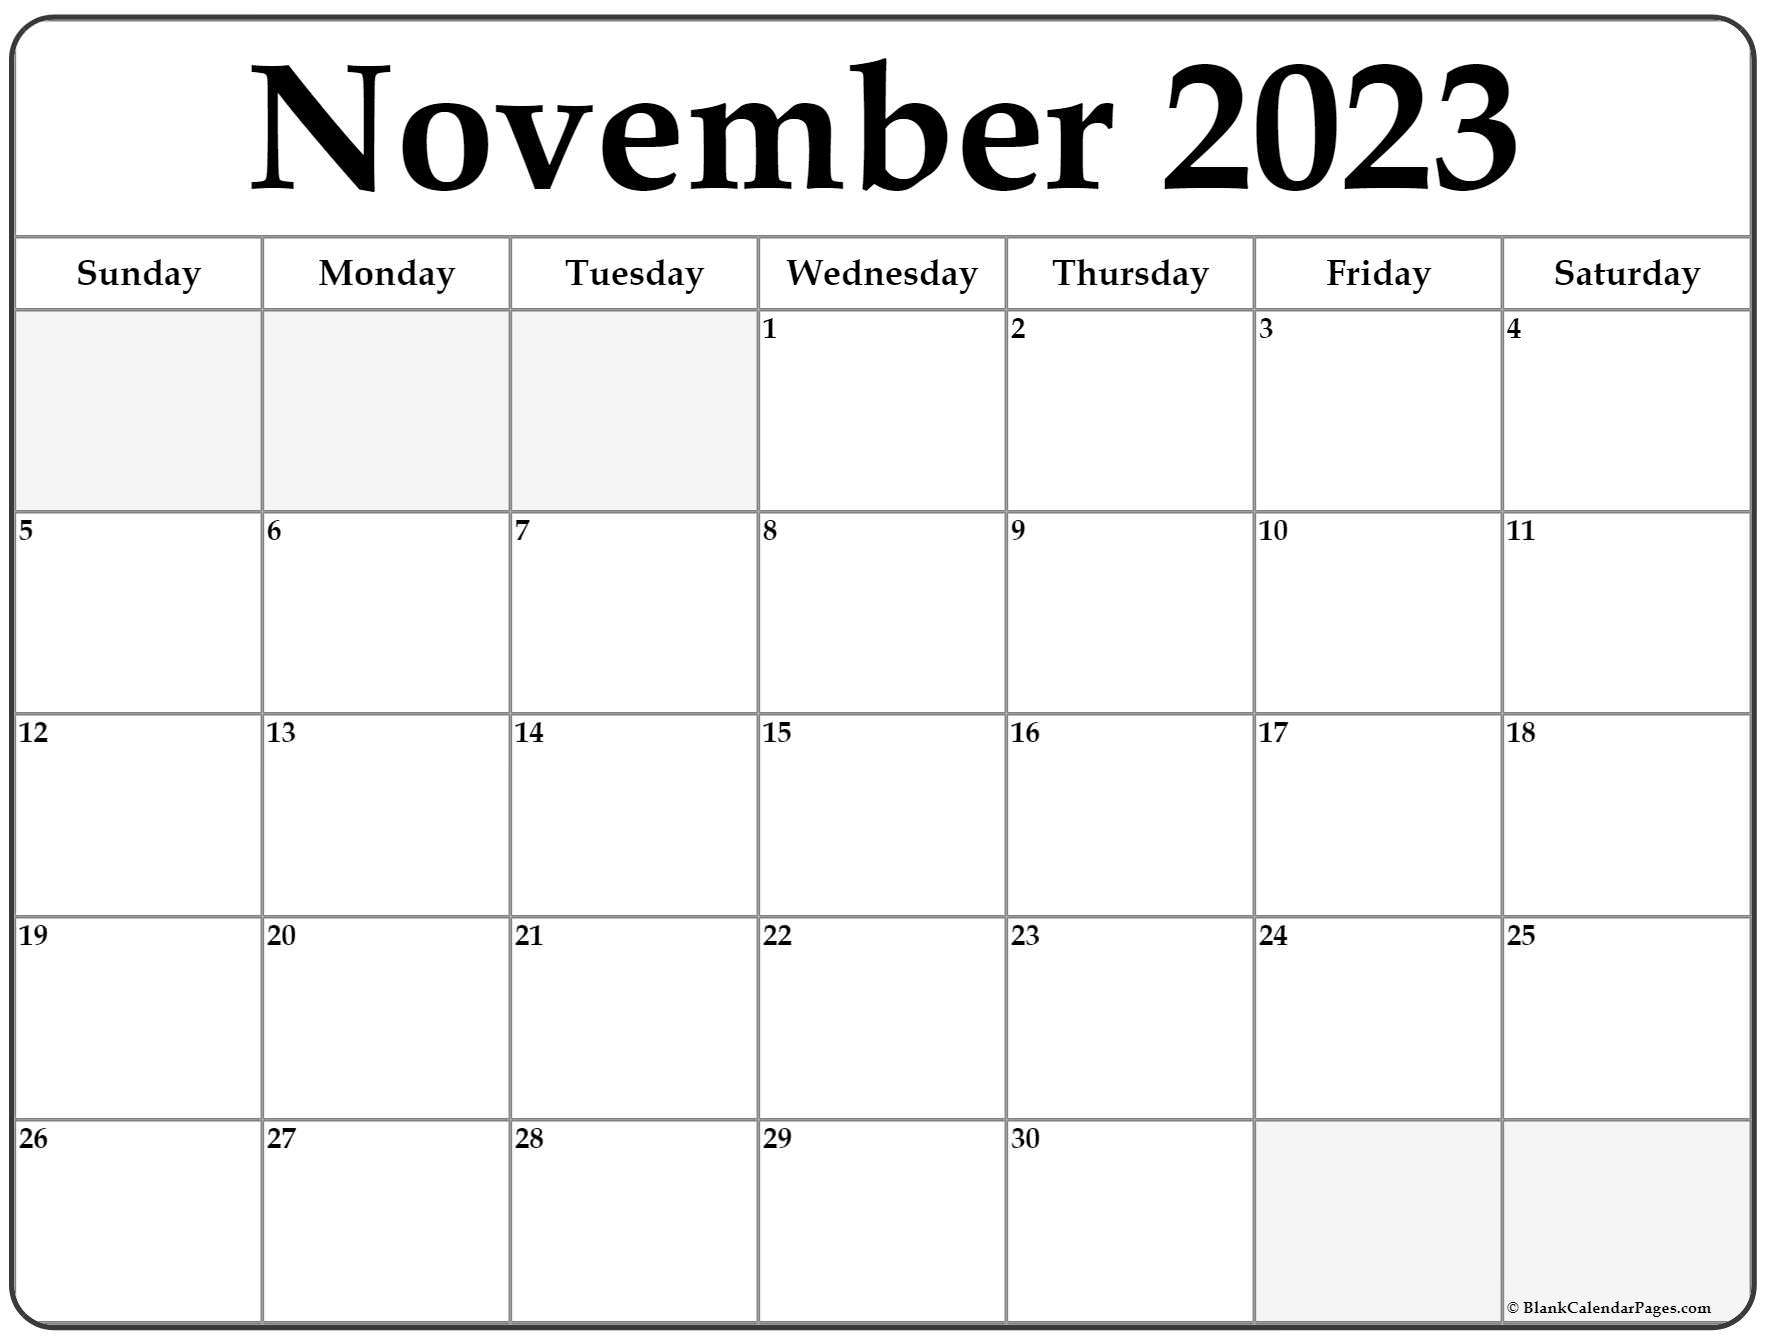 November 2023 calendar | free printable calendar